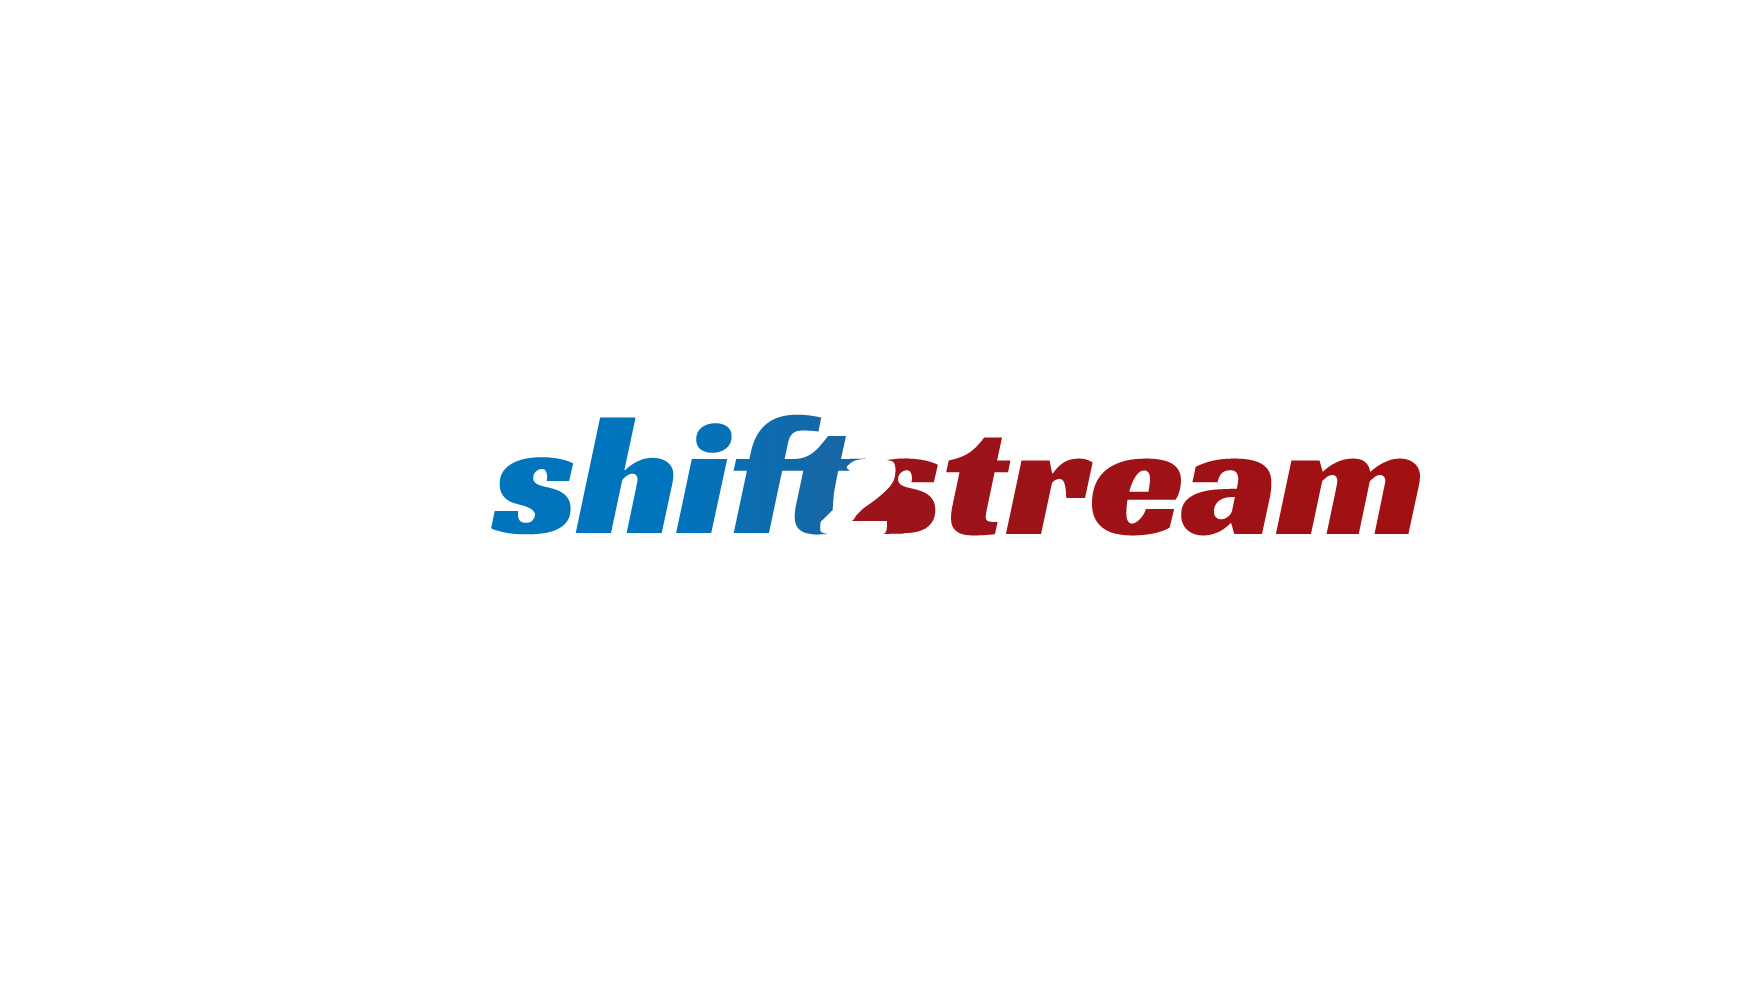 Shift2Stream